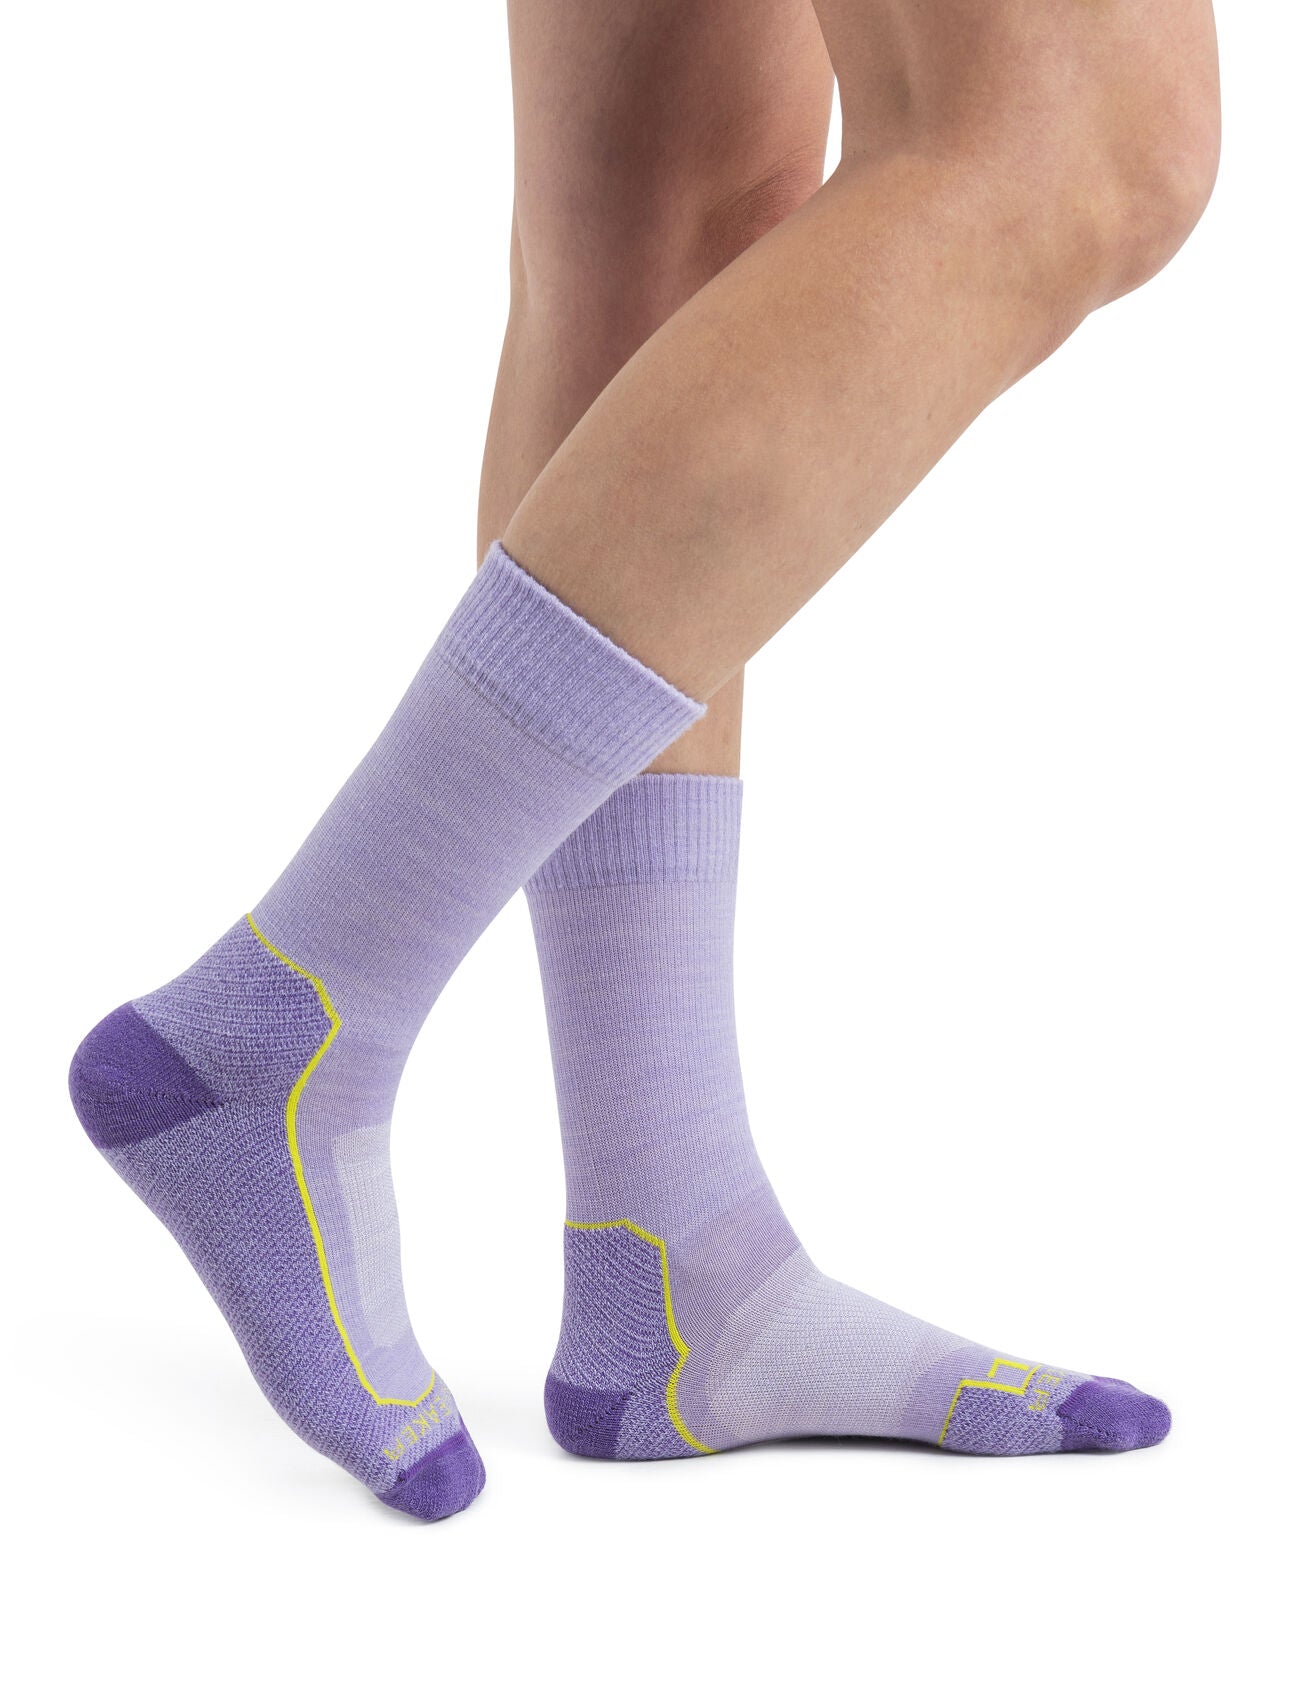 Icebreaker Merino Hike+ Light Crew Socks (Women's) - Purple Gaze/Magic - Find Your Feet Australia Hobart Launceston Tasmania